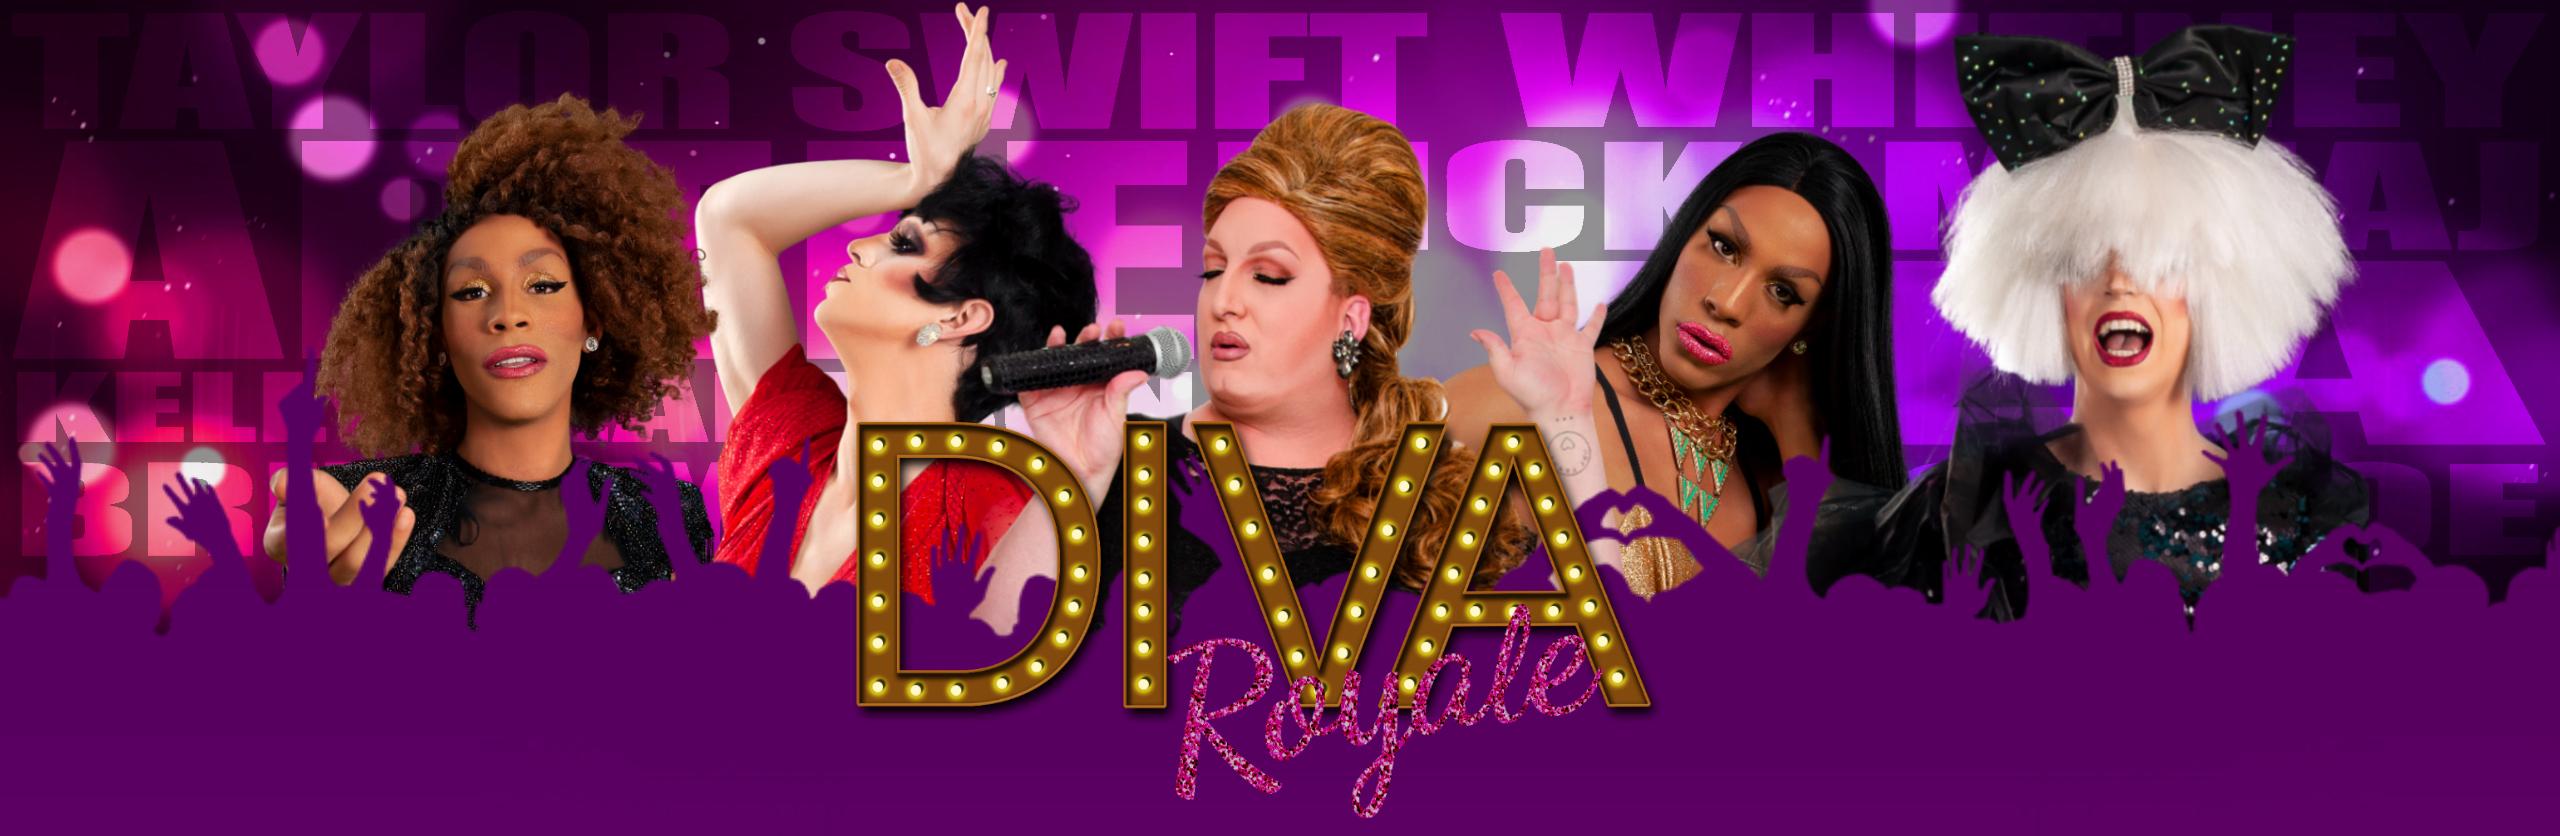 Diva Royale - Drag Queen Show Atlanta